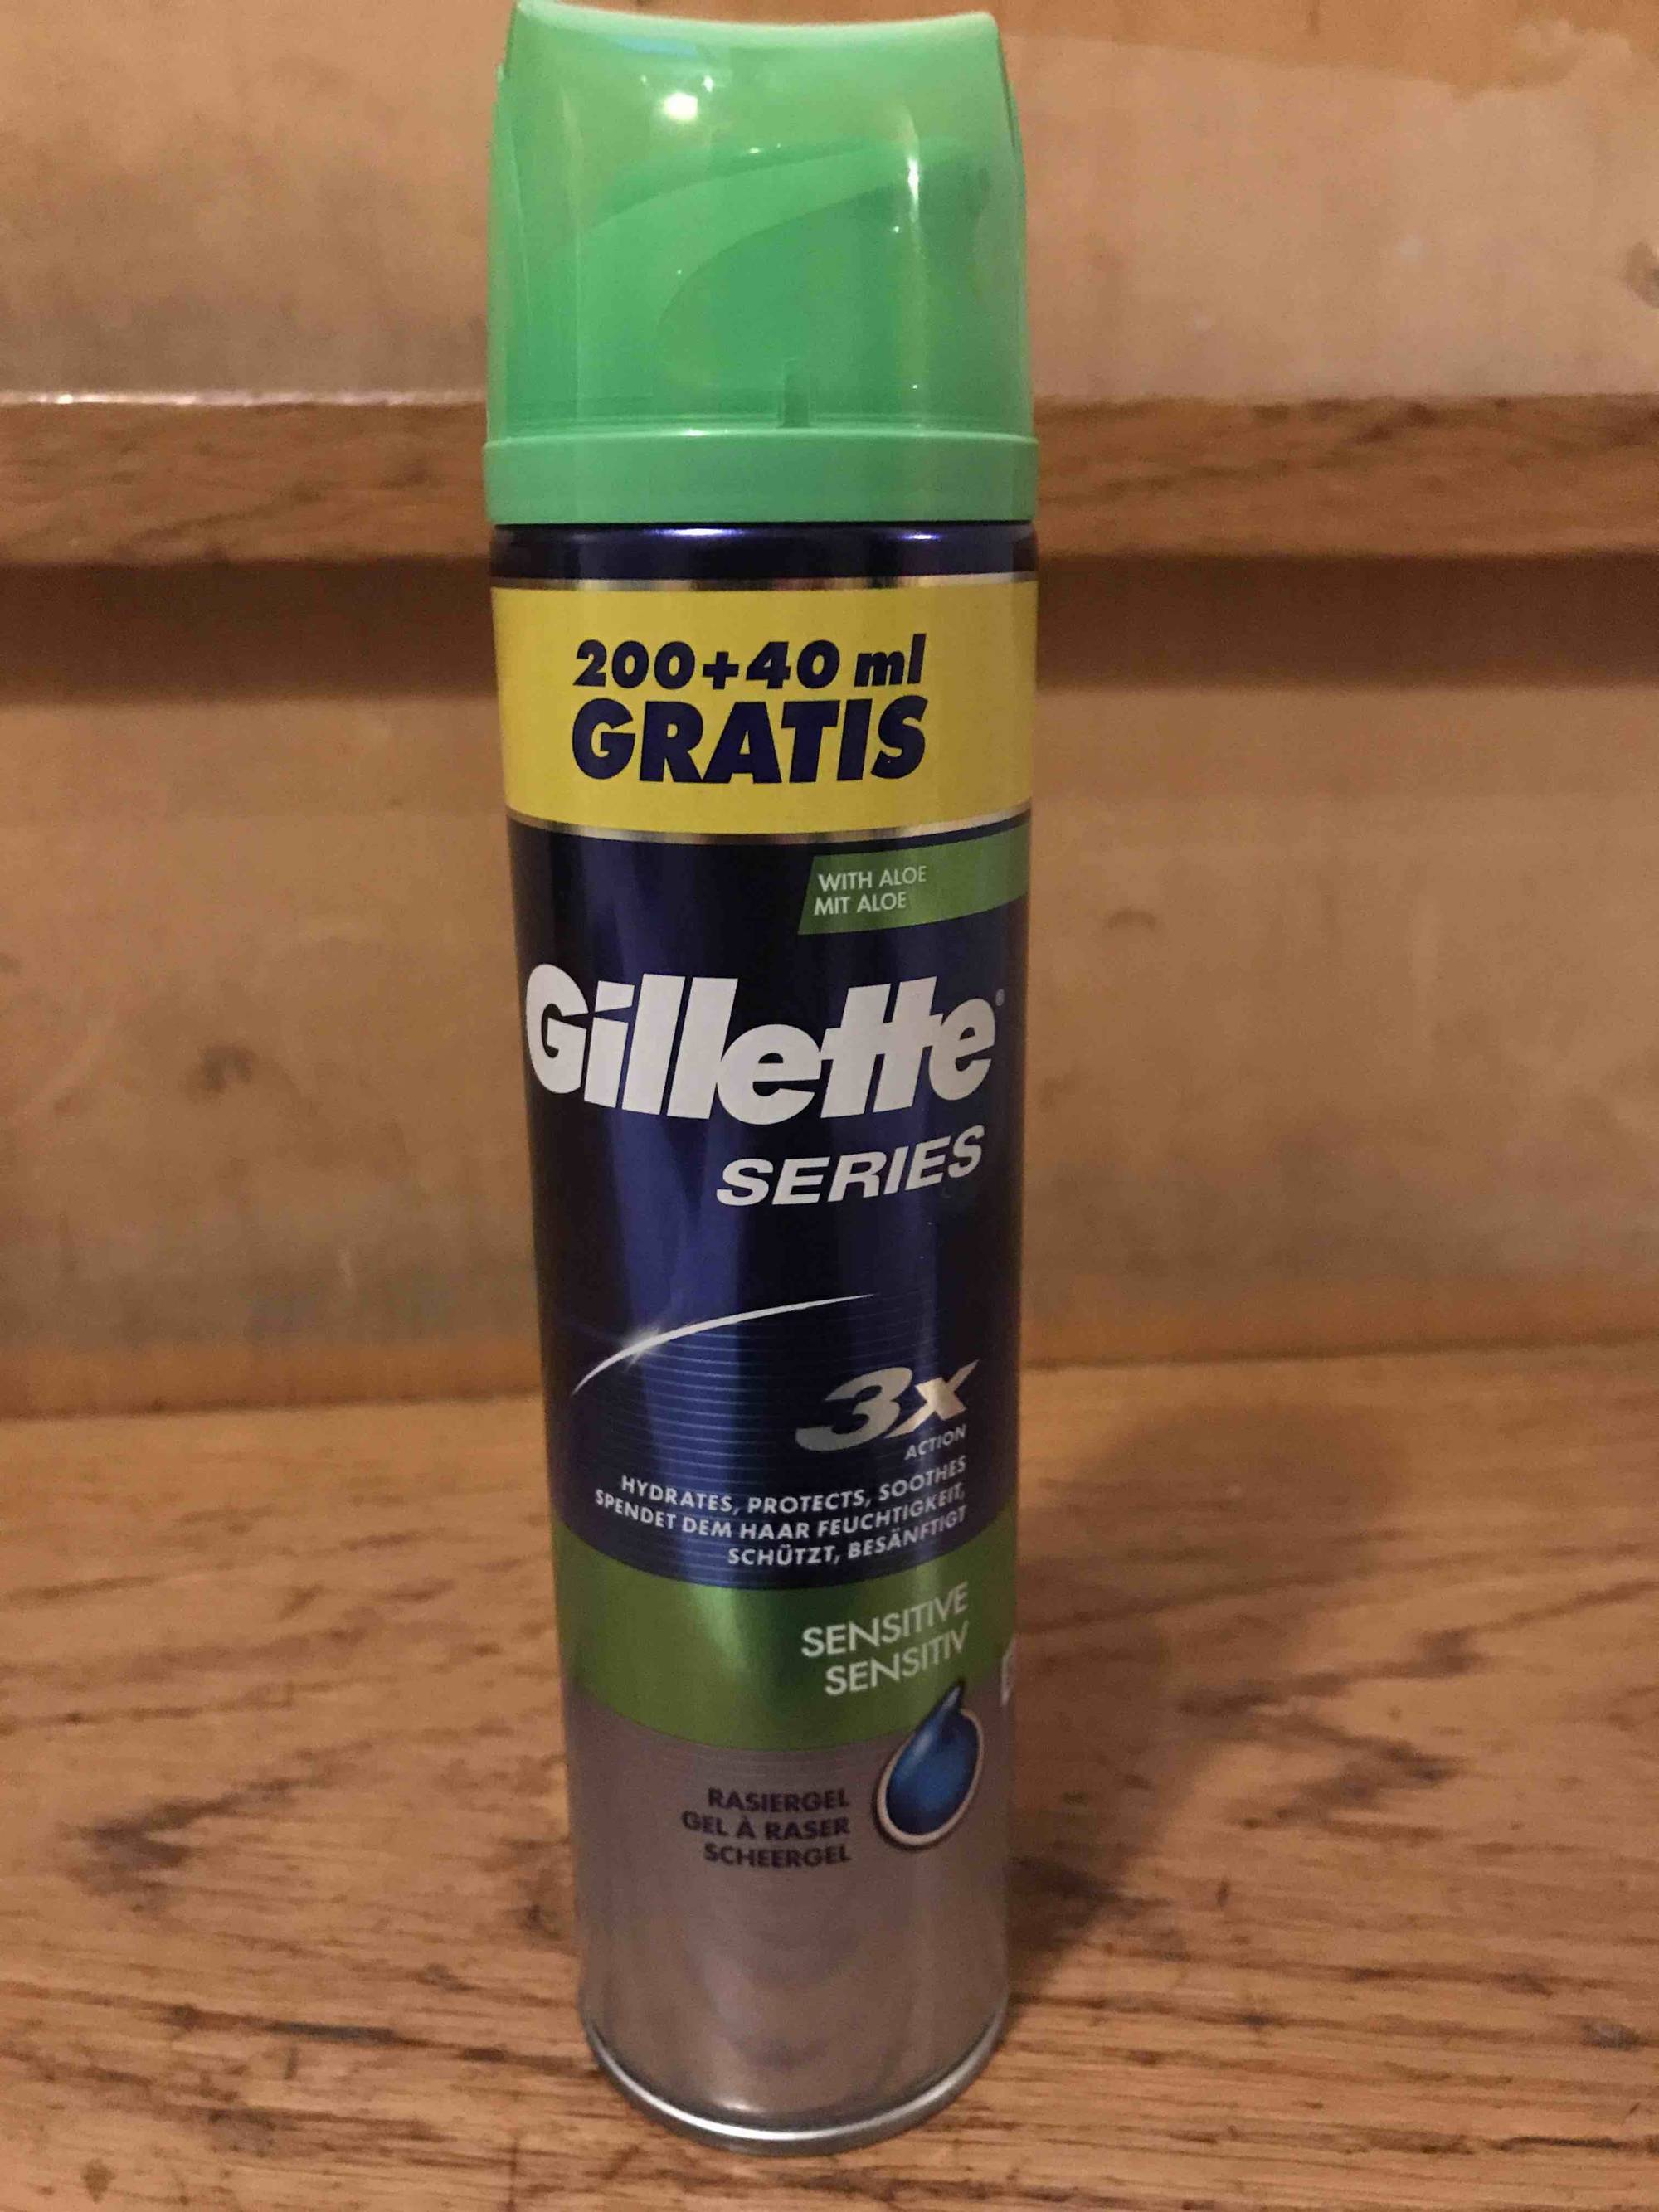 GILLETTE - Series 3x sensitive - Gel à raser